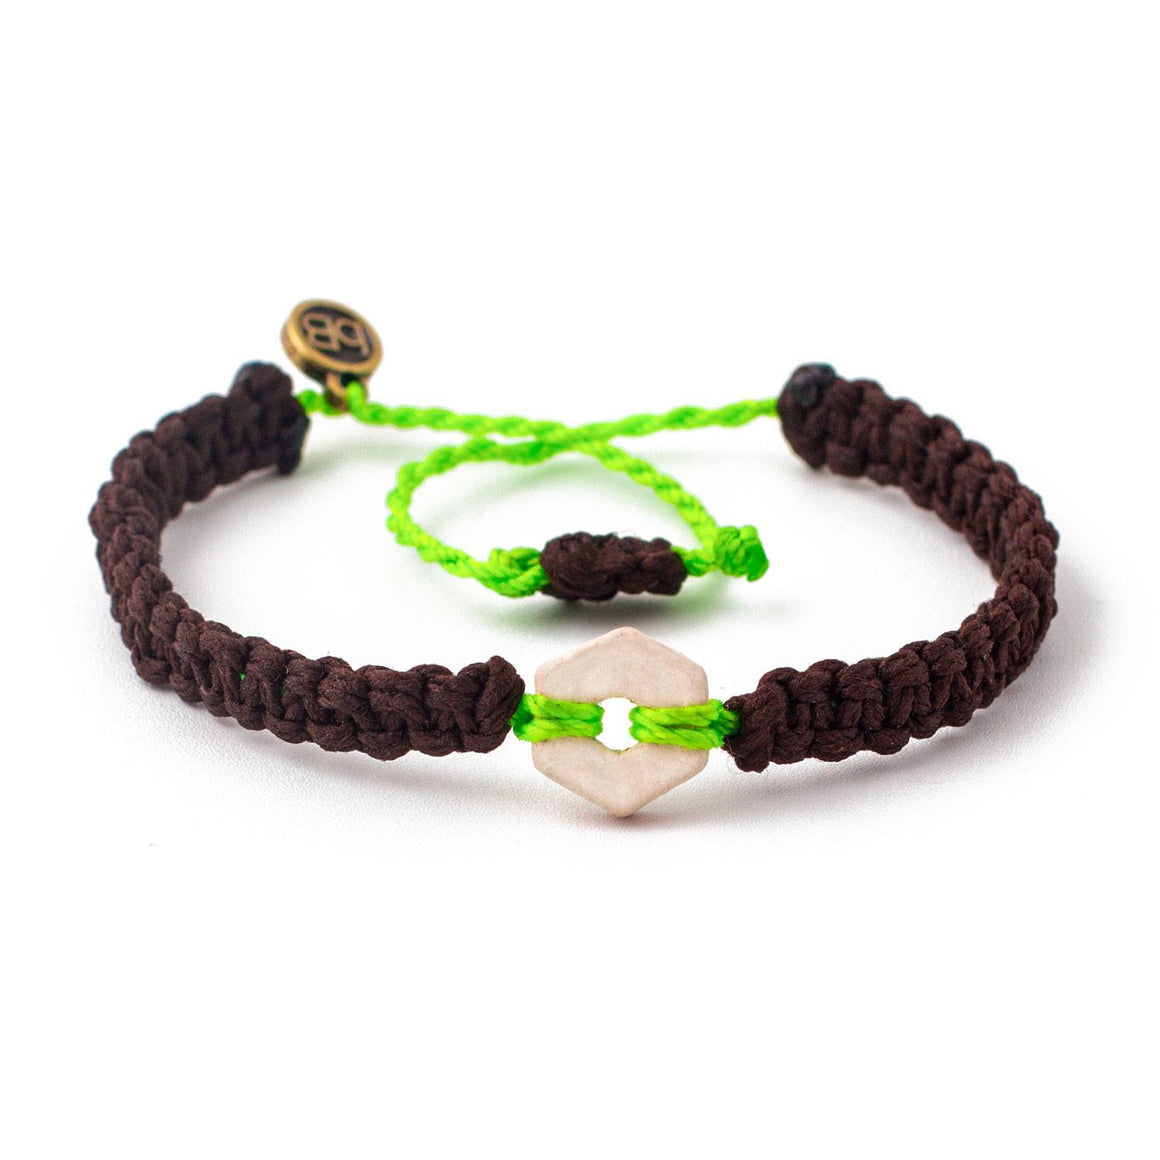 White Rustic Bright Green handmade ethnic bracelets cover